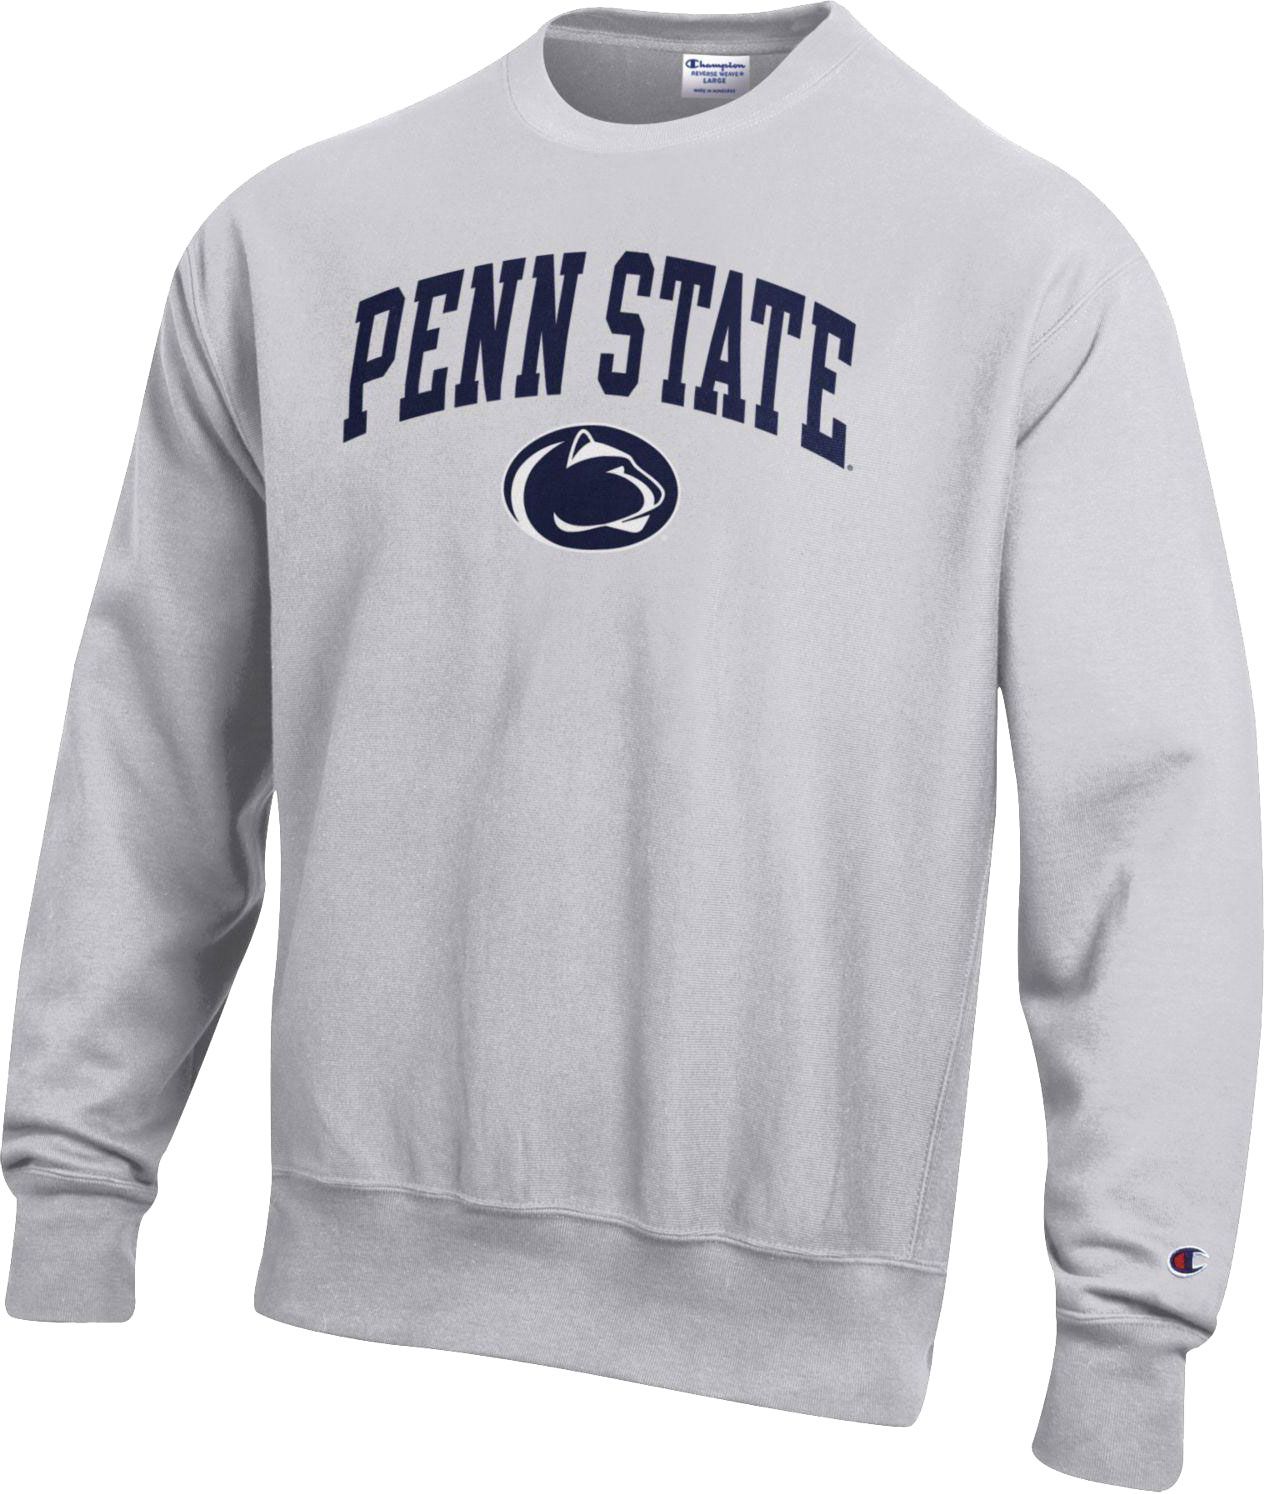 penn state men's sweater